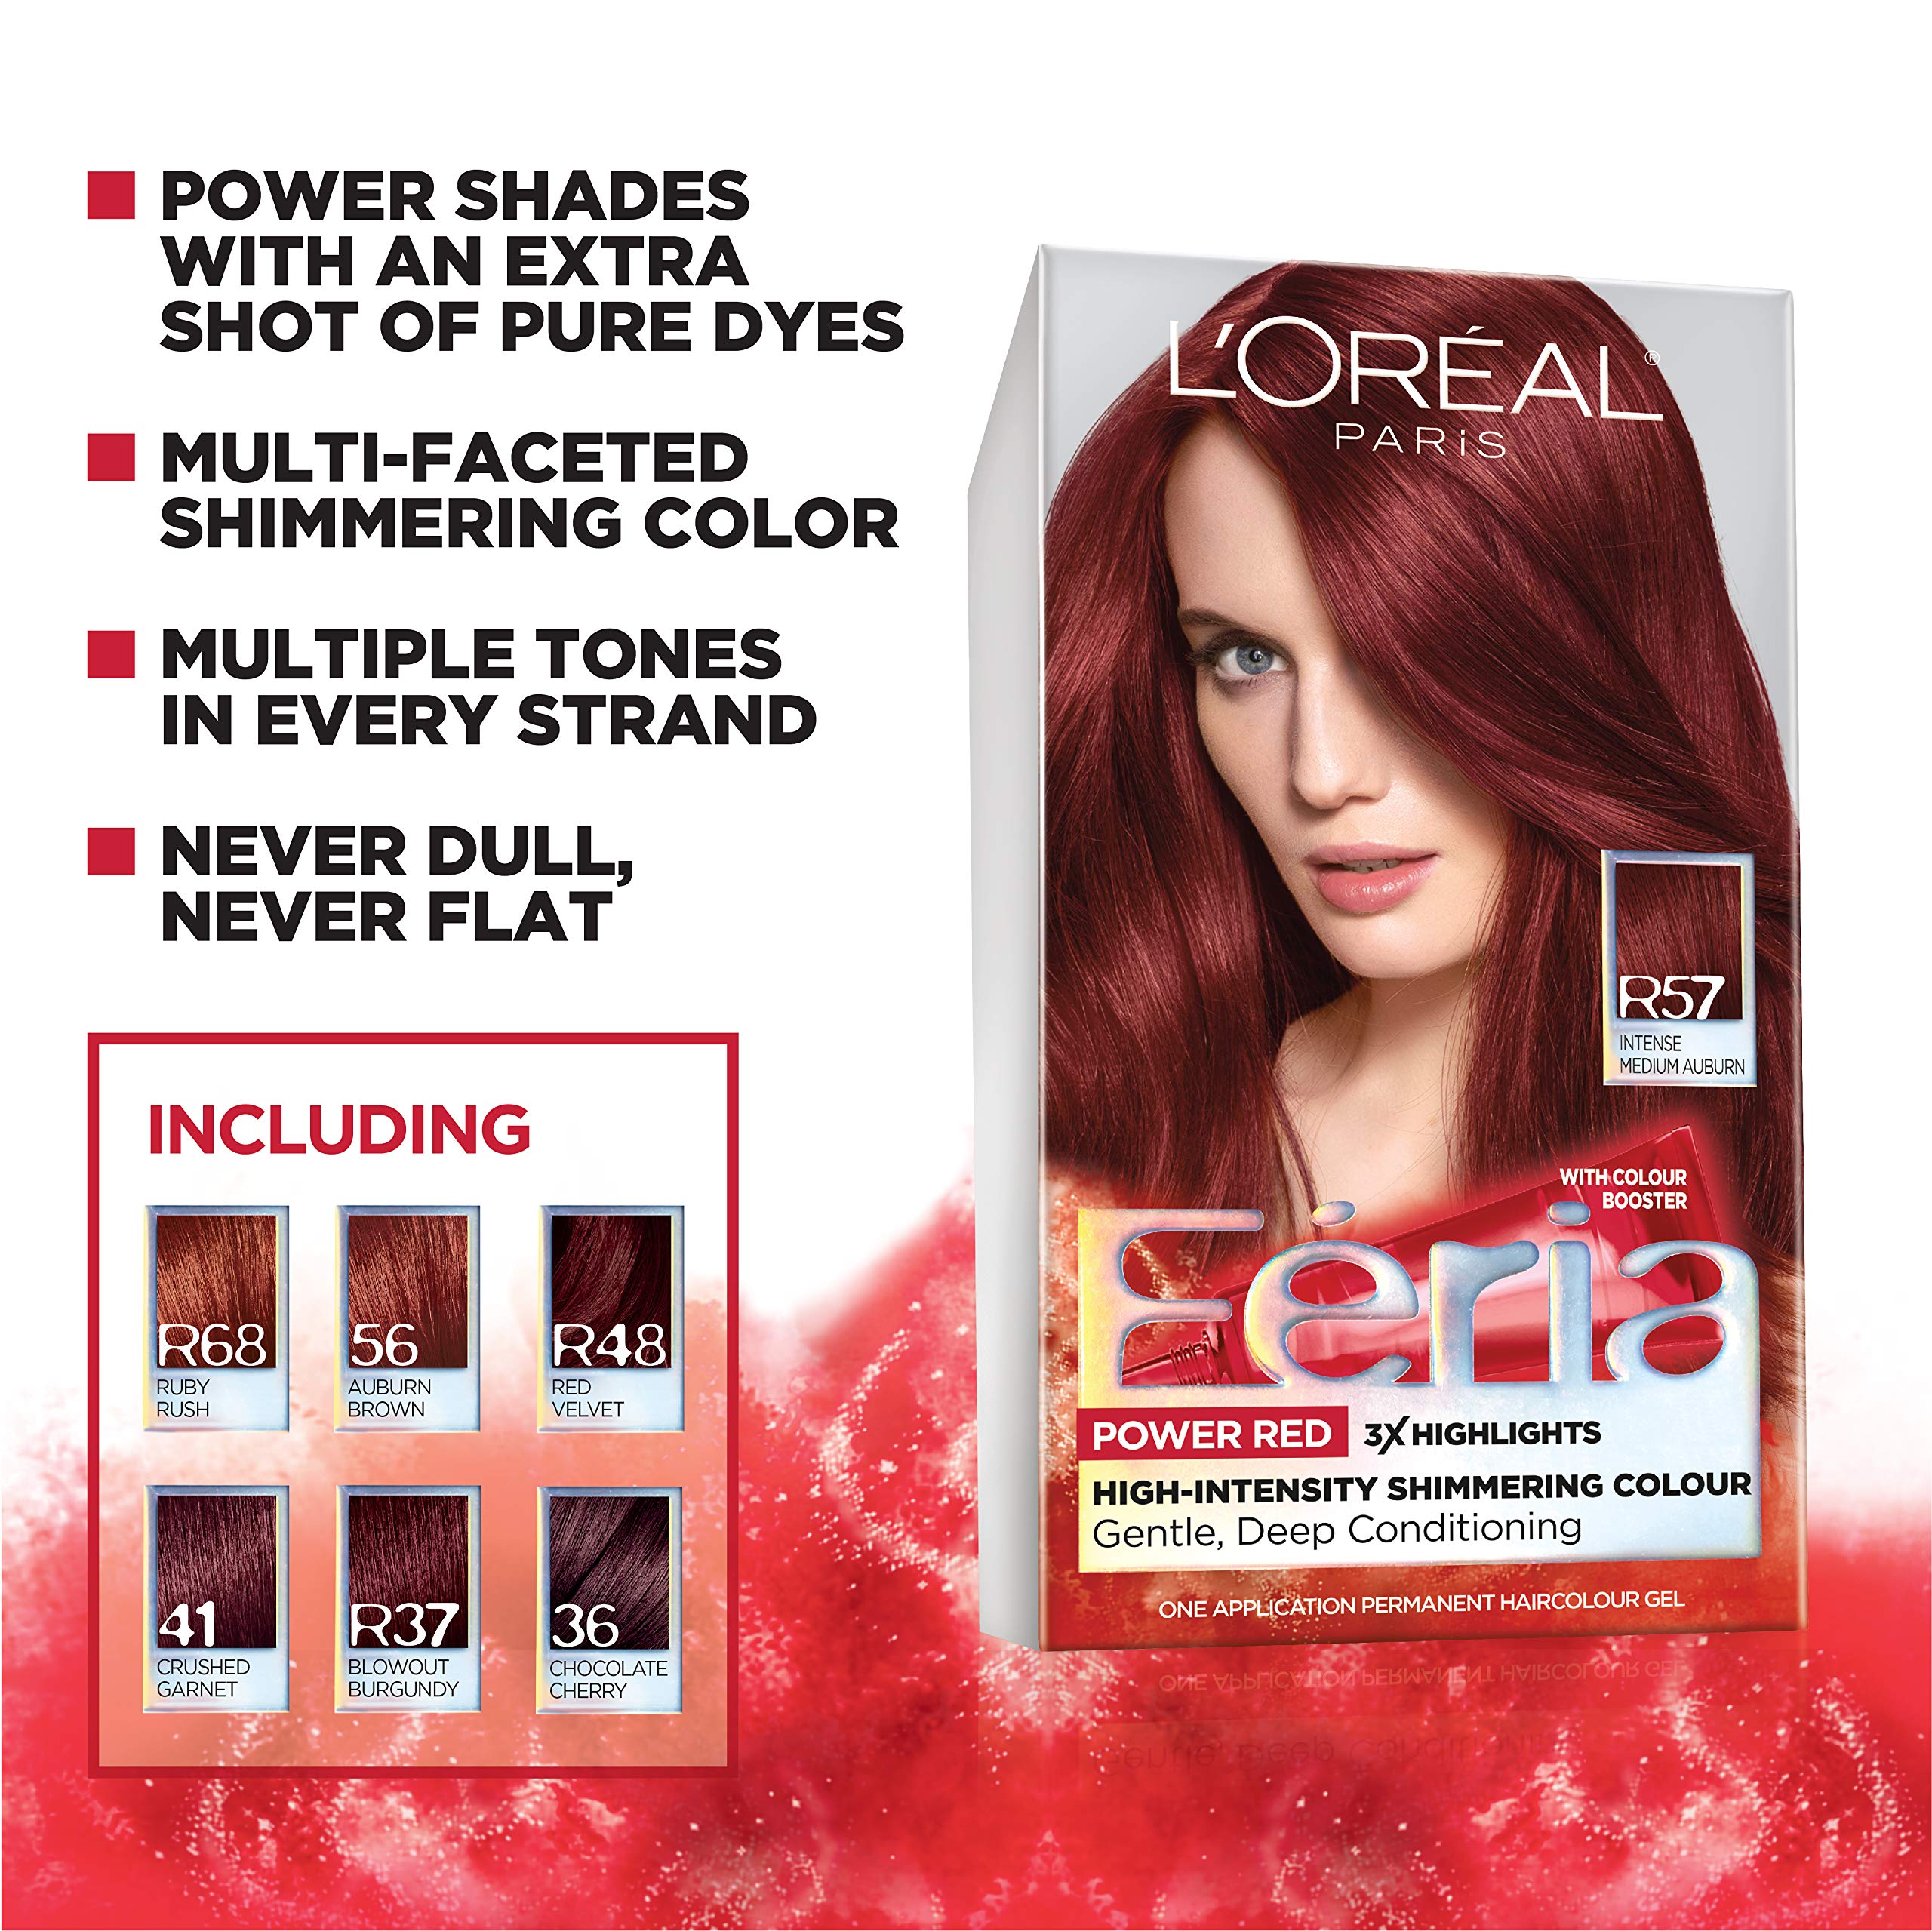 Mua L'Oreal Paris Feria Multi-Faceted Shimmering Permanent Hair Color, R57  Cherry Crush (Intense Medium Auburn), Pack of 1, Hair Dye trên Amazon Mỹ  chính hãng 2023 | Giaonhan247